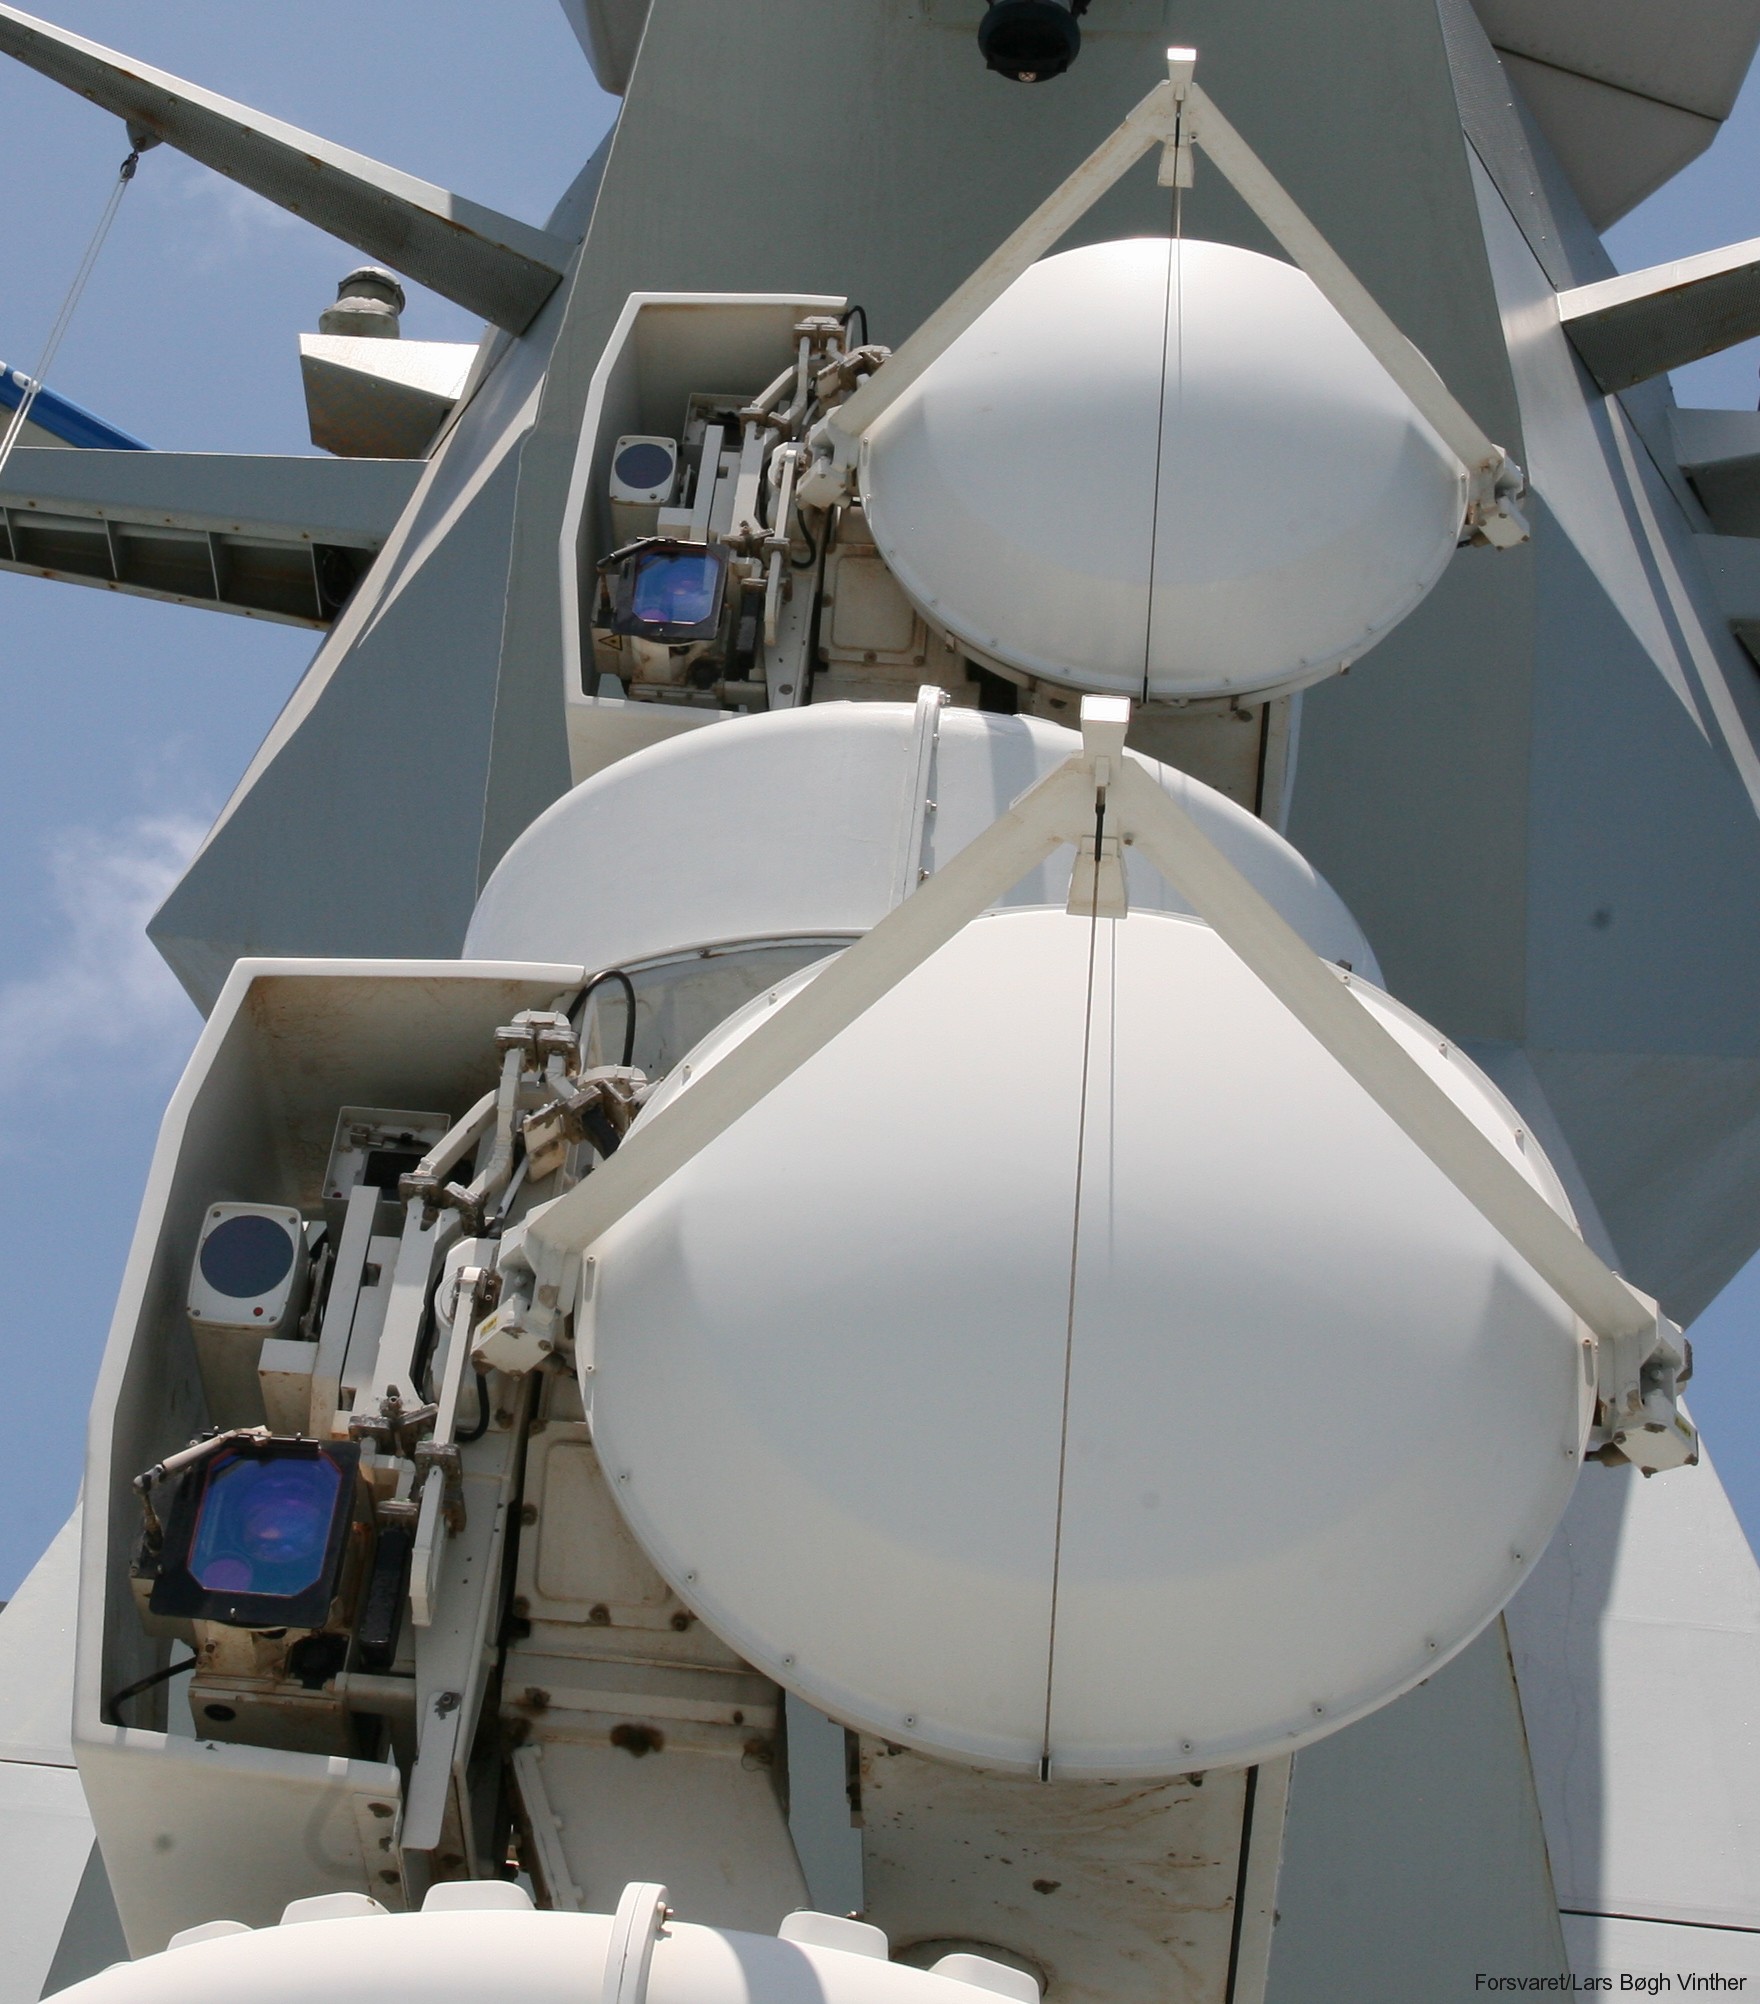 absalon class frigate command support ship royal danish navy 69x saab ceros 200 fire control director radar target